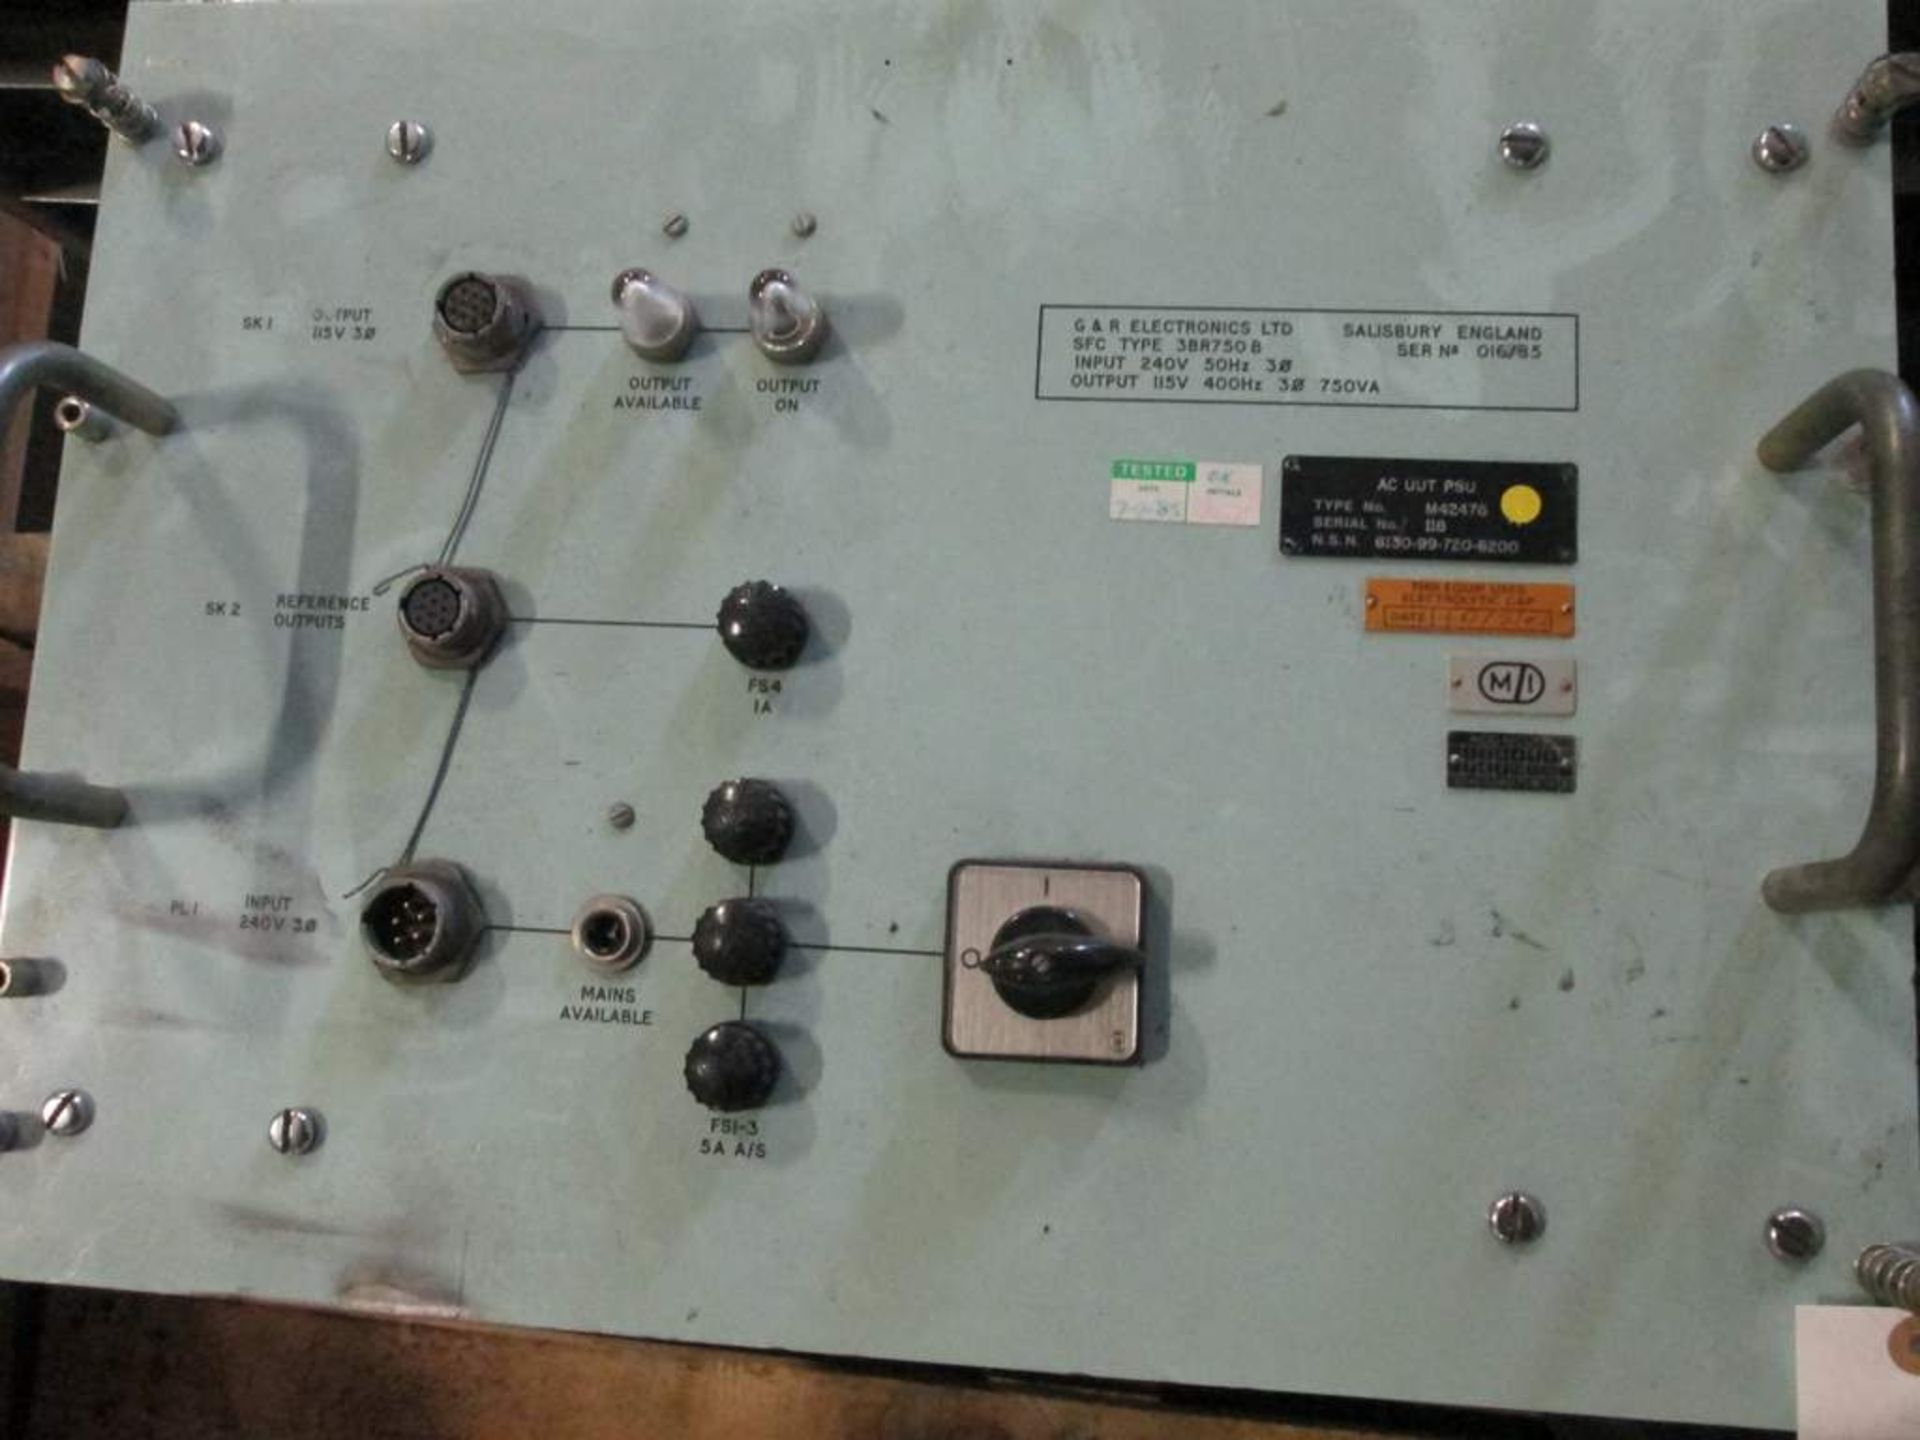 3x Marconi AC UUT PSU control unit NSN:6130-99-720-6200 - Image 2 of 2